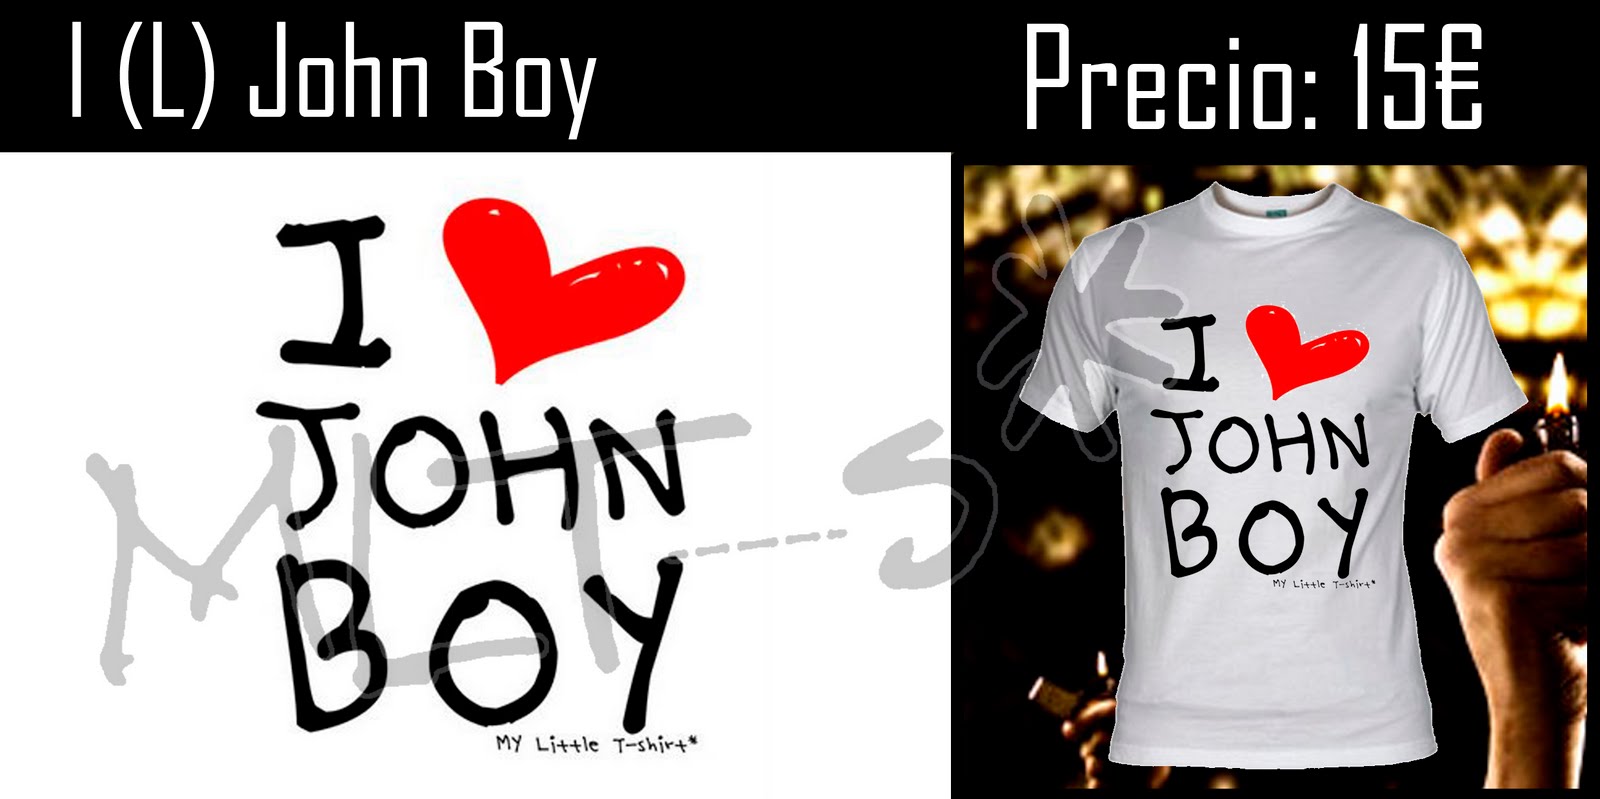 My Little T-Shirt: I (L) John Boy